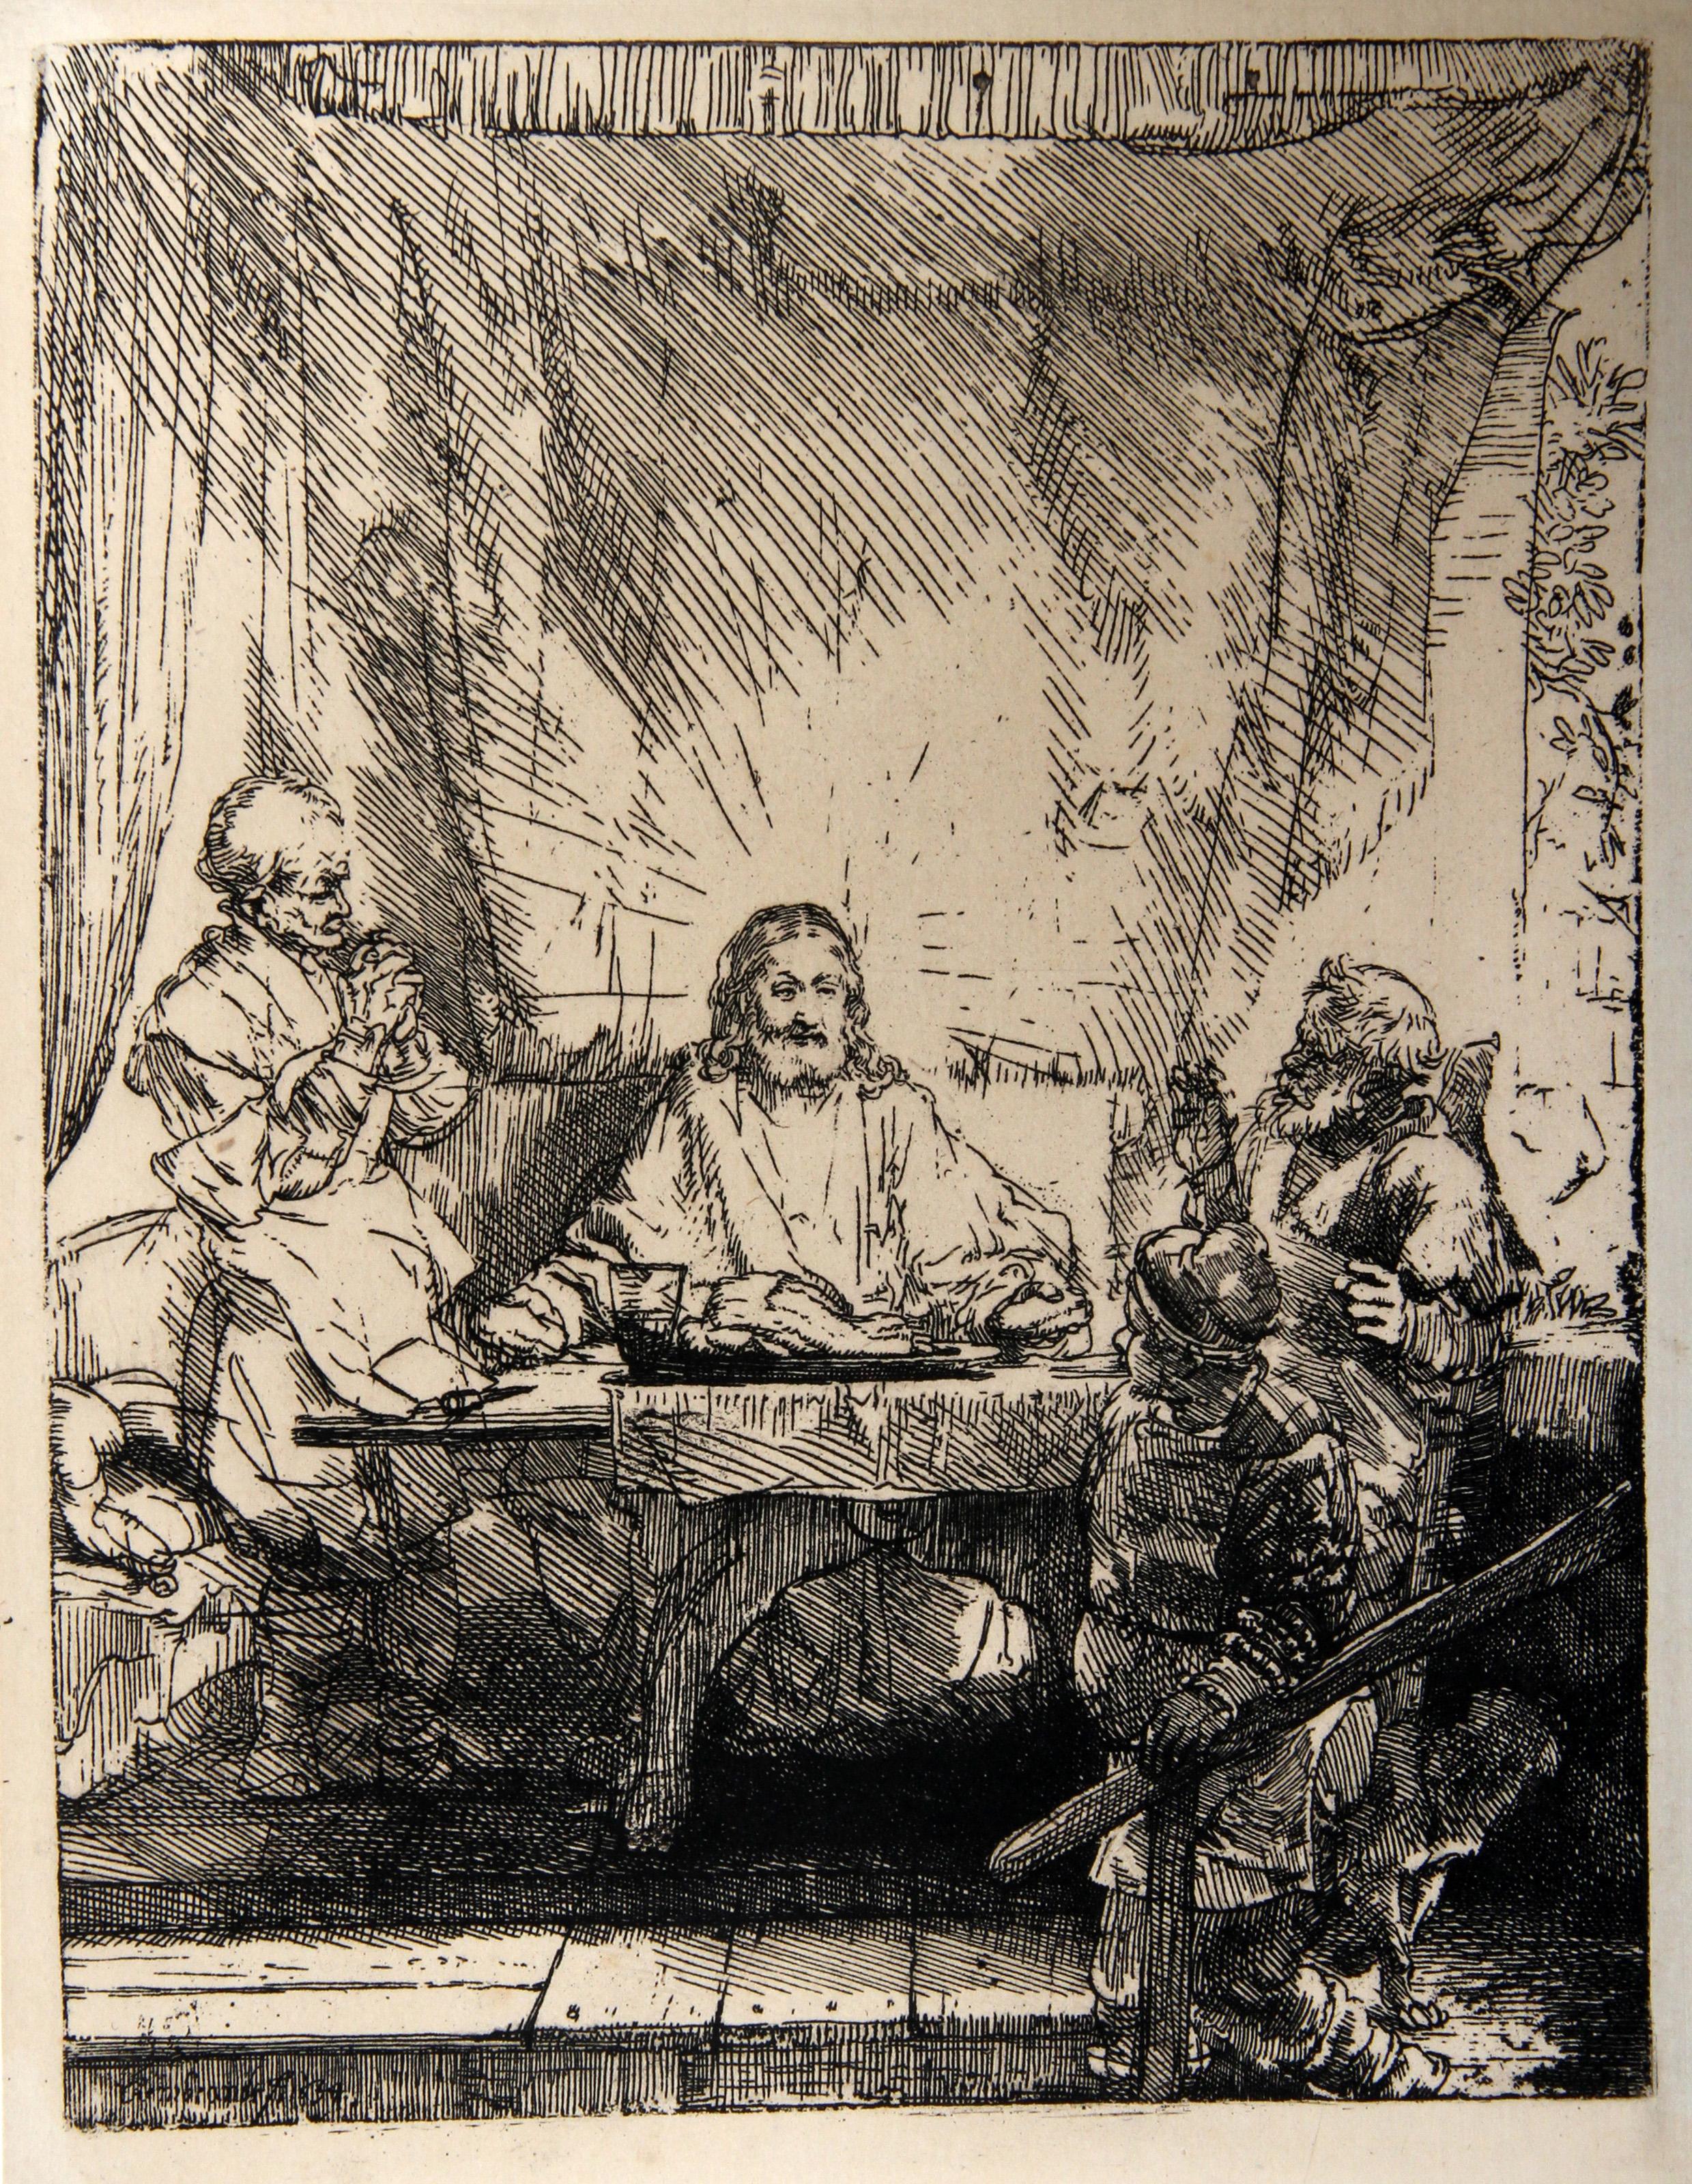  Rembrandt van Rijn, After by Amand Durand, Dutch (1606 - 1669) - Les Pelerins d'Emmaus (B87), Year: 1878 (of original 1633), Medium: Heliogravure on laid paper, Size: 8.5  x 6.5 in. (21.59  x 16.51 cm), Printer: Amand Durand, Publisher: Gazette des